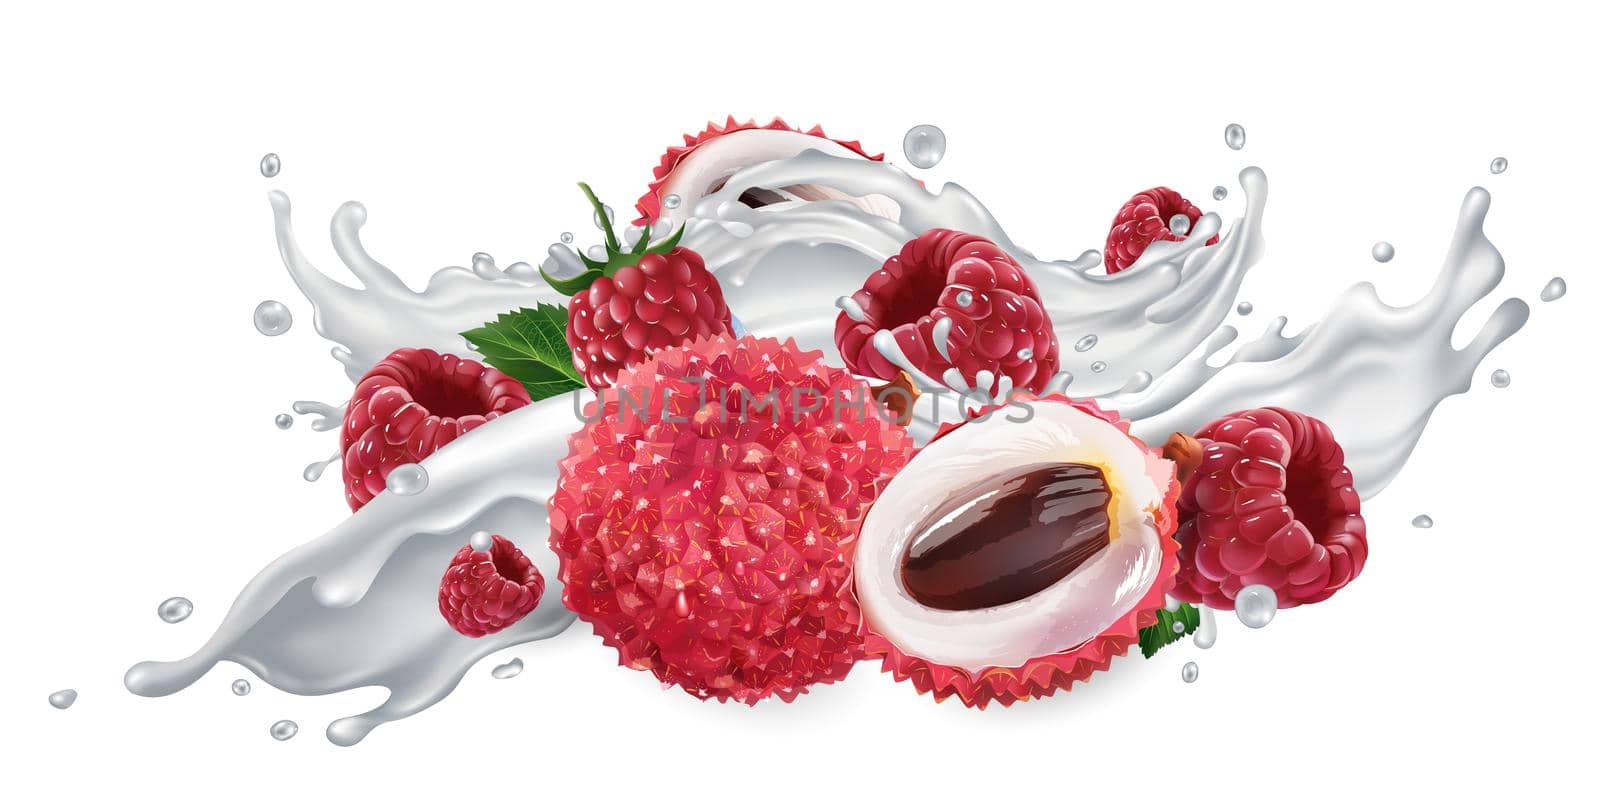 Lychee and raspberries in a yogurt splash. by ConceptCafe